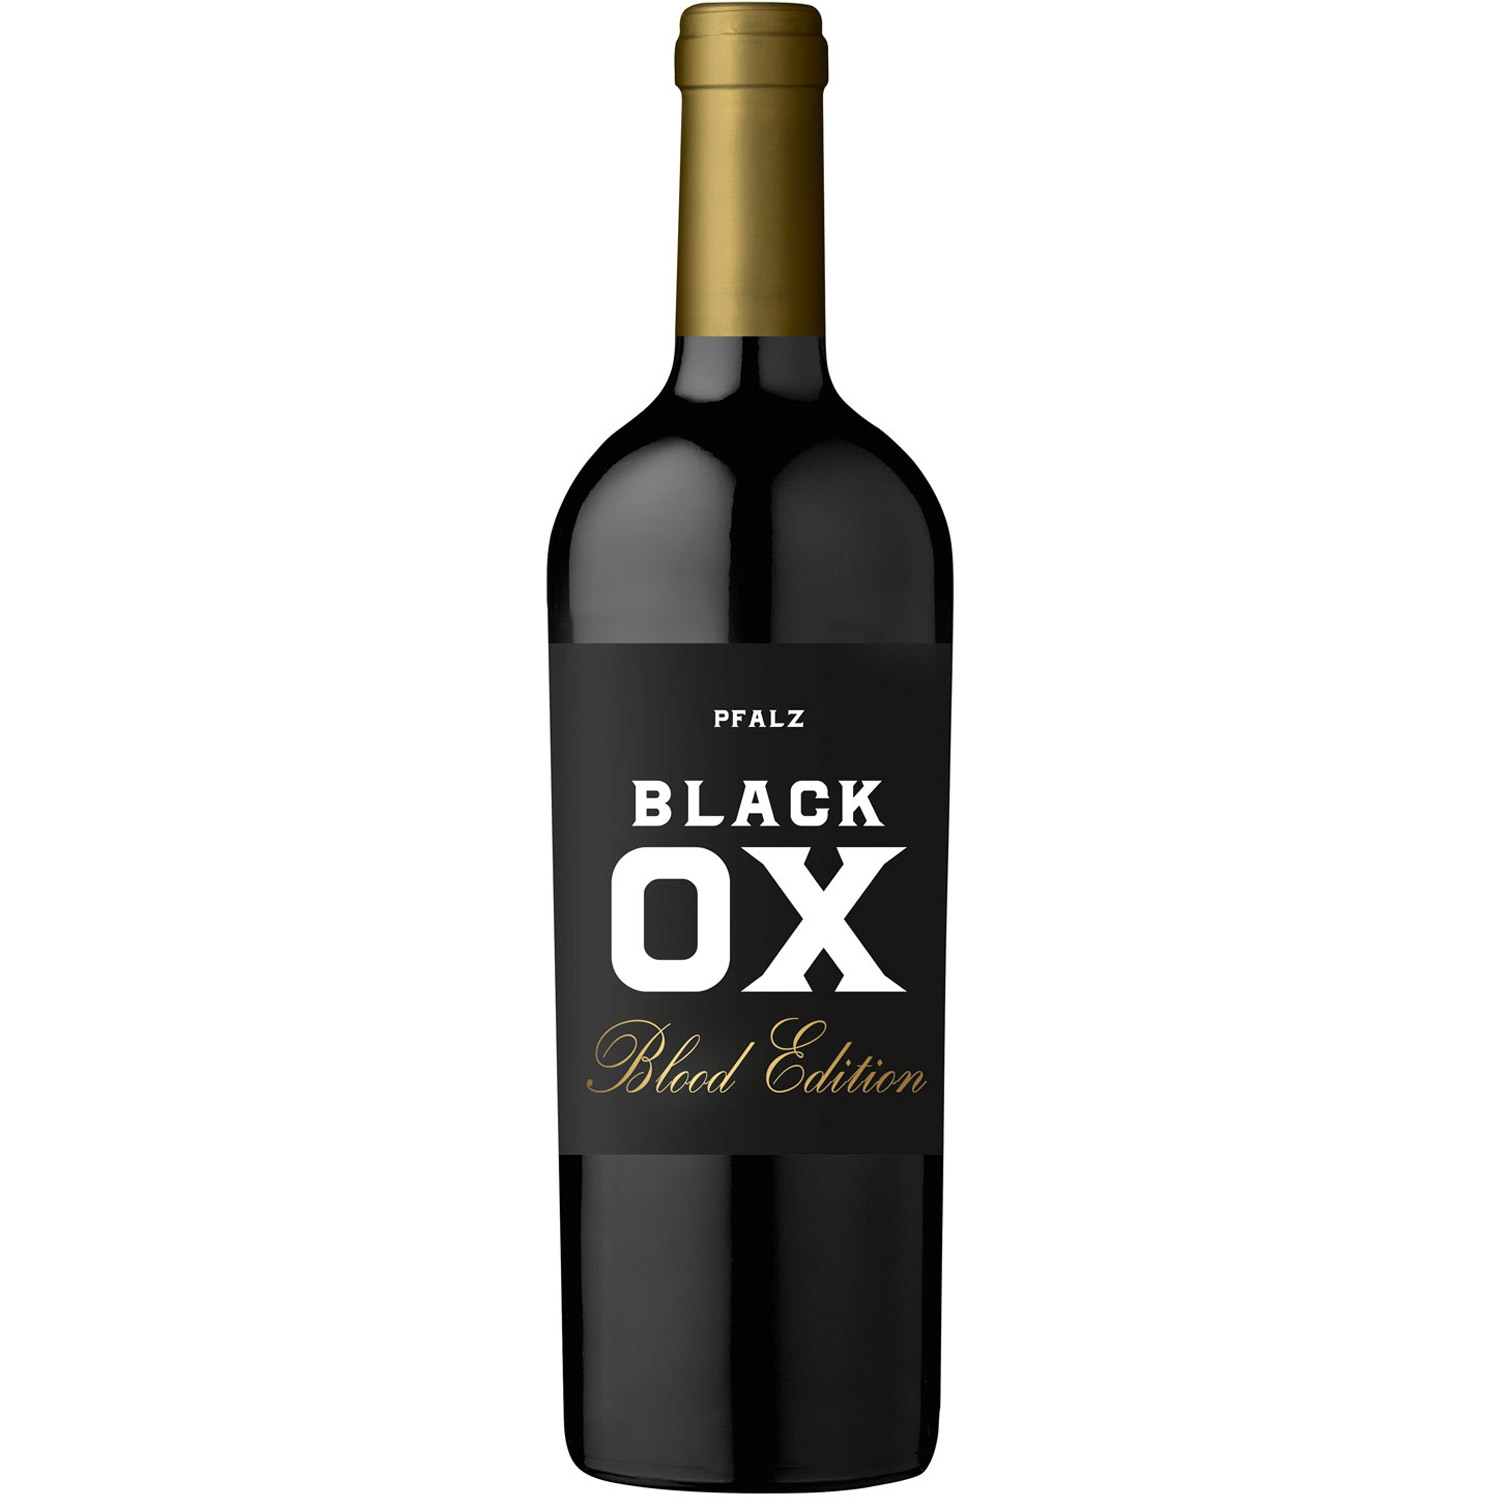 Pfalz Black OX Blood Edition 2018